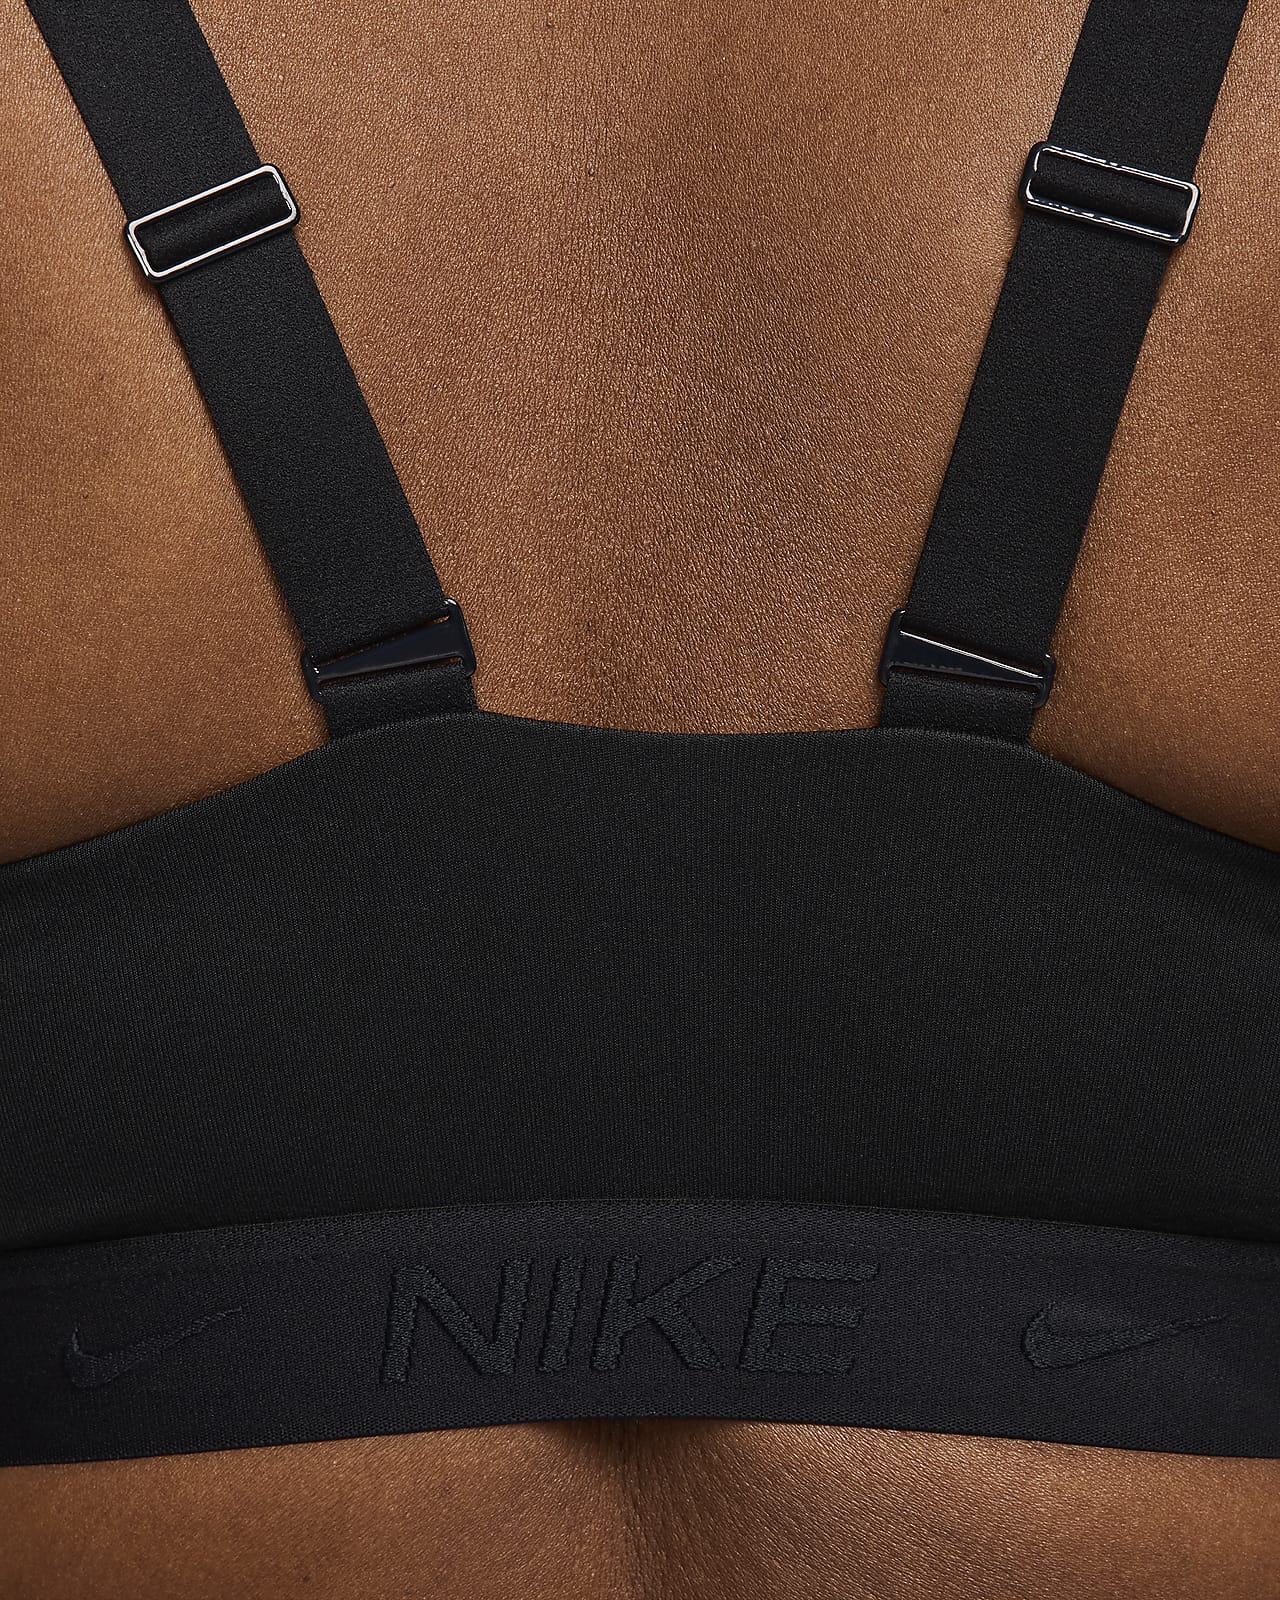 Nike Indy Medium-Support Women's Padded Adjustable Sports Bra